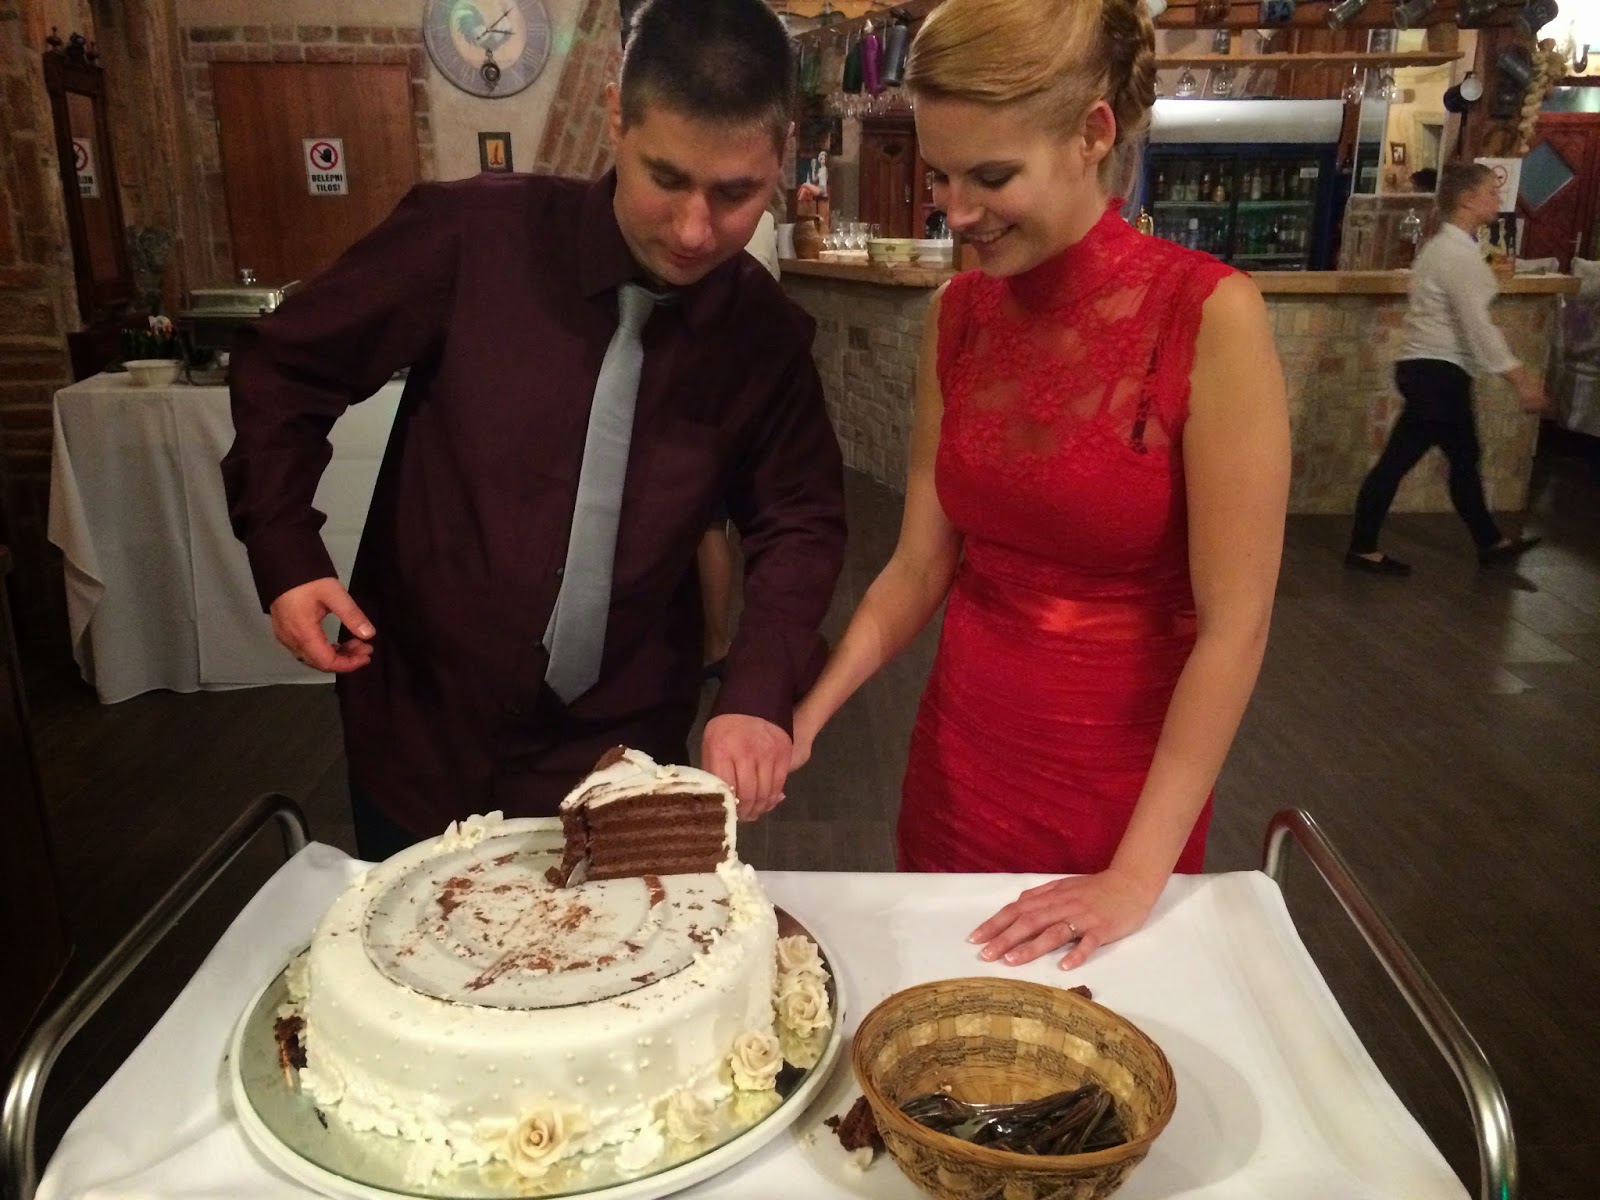 Esküvői torta